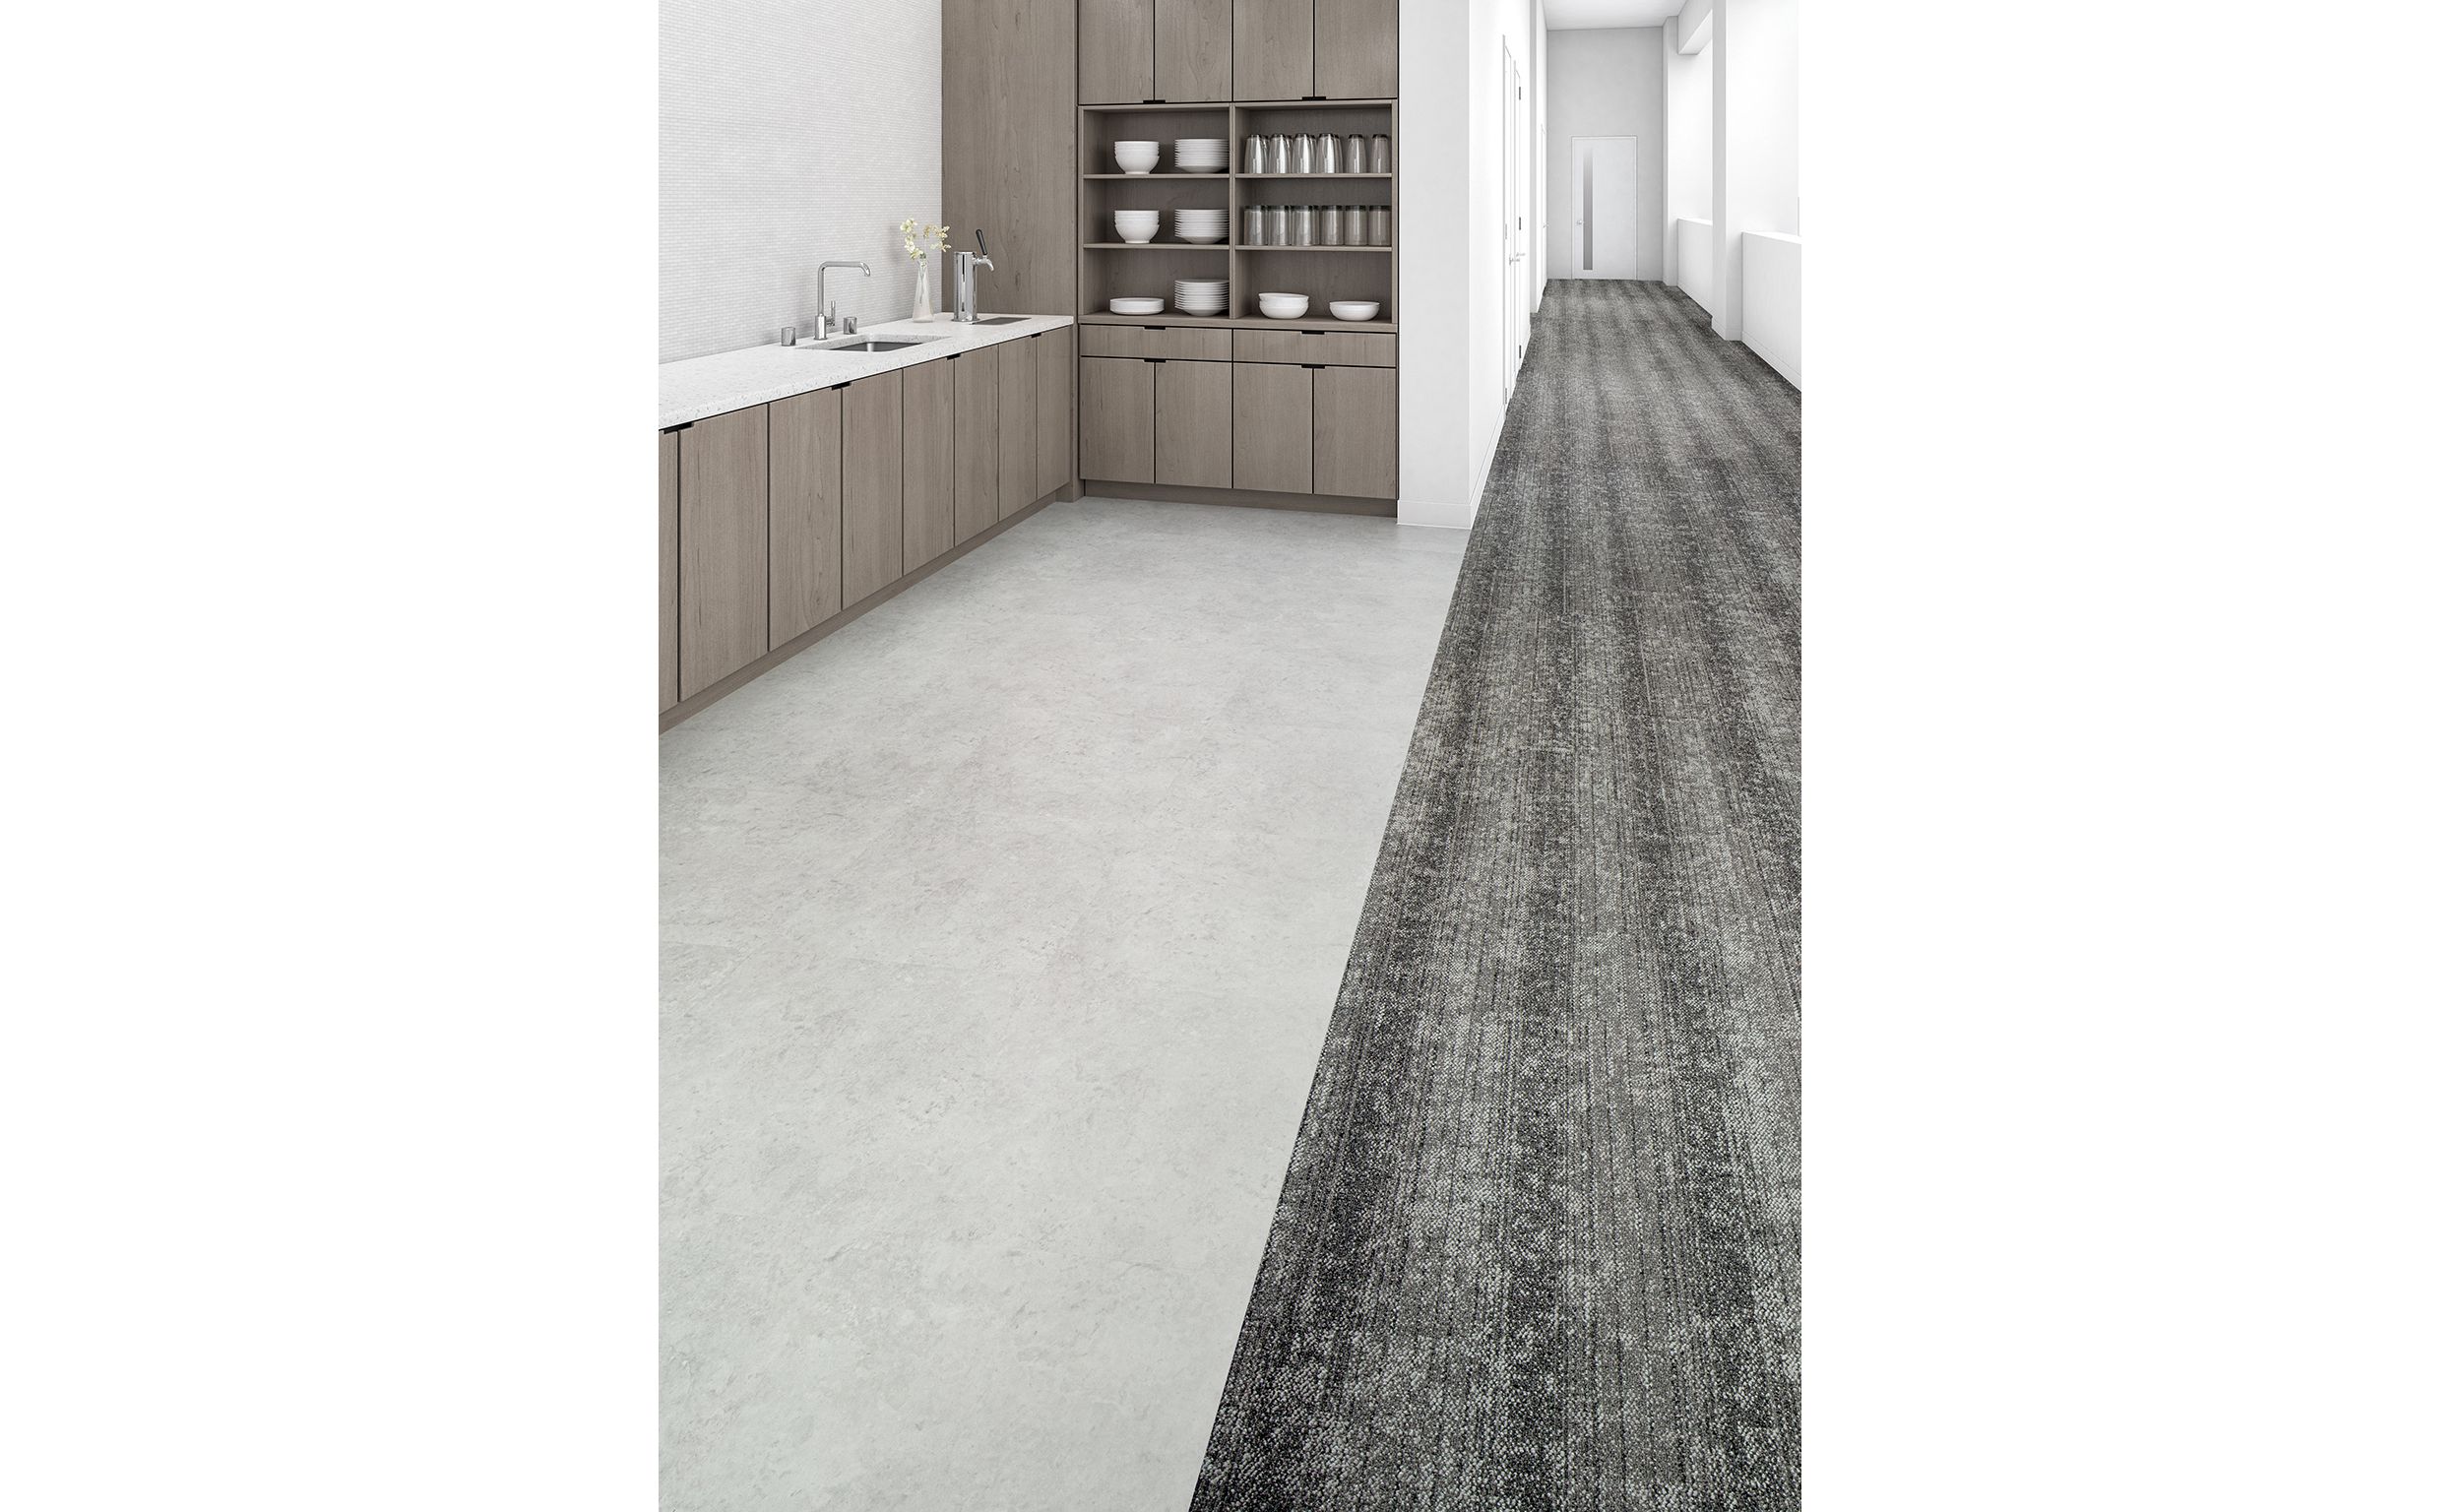 Interface Veiled Brushwork carpet tile and Textured Stones LVT in office break area imagen número 3